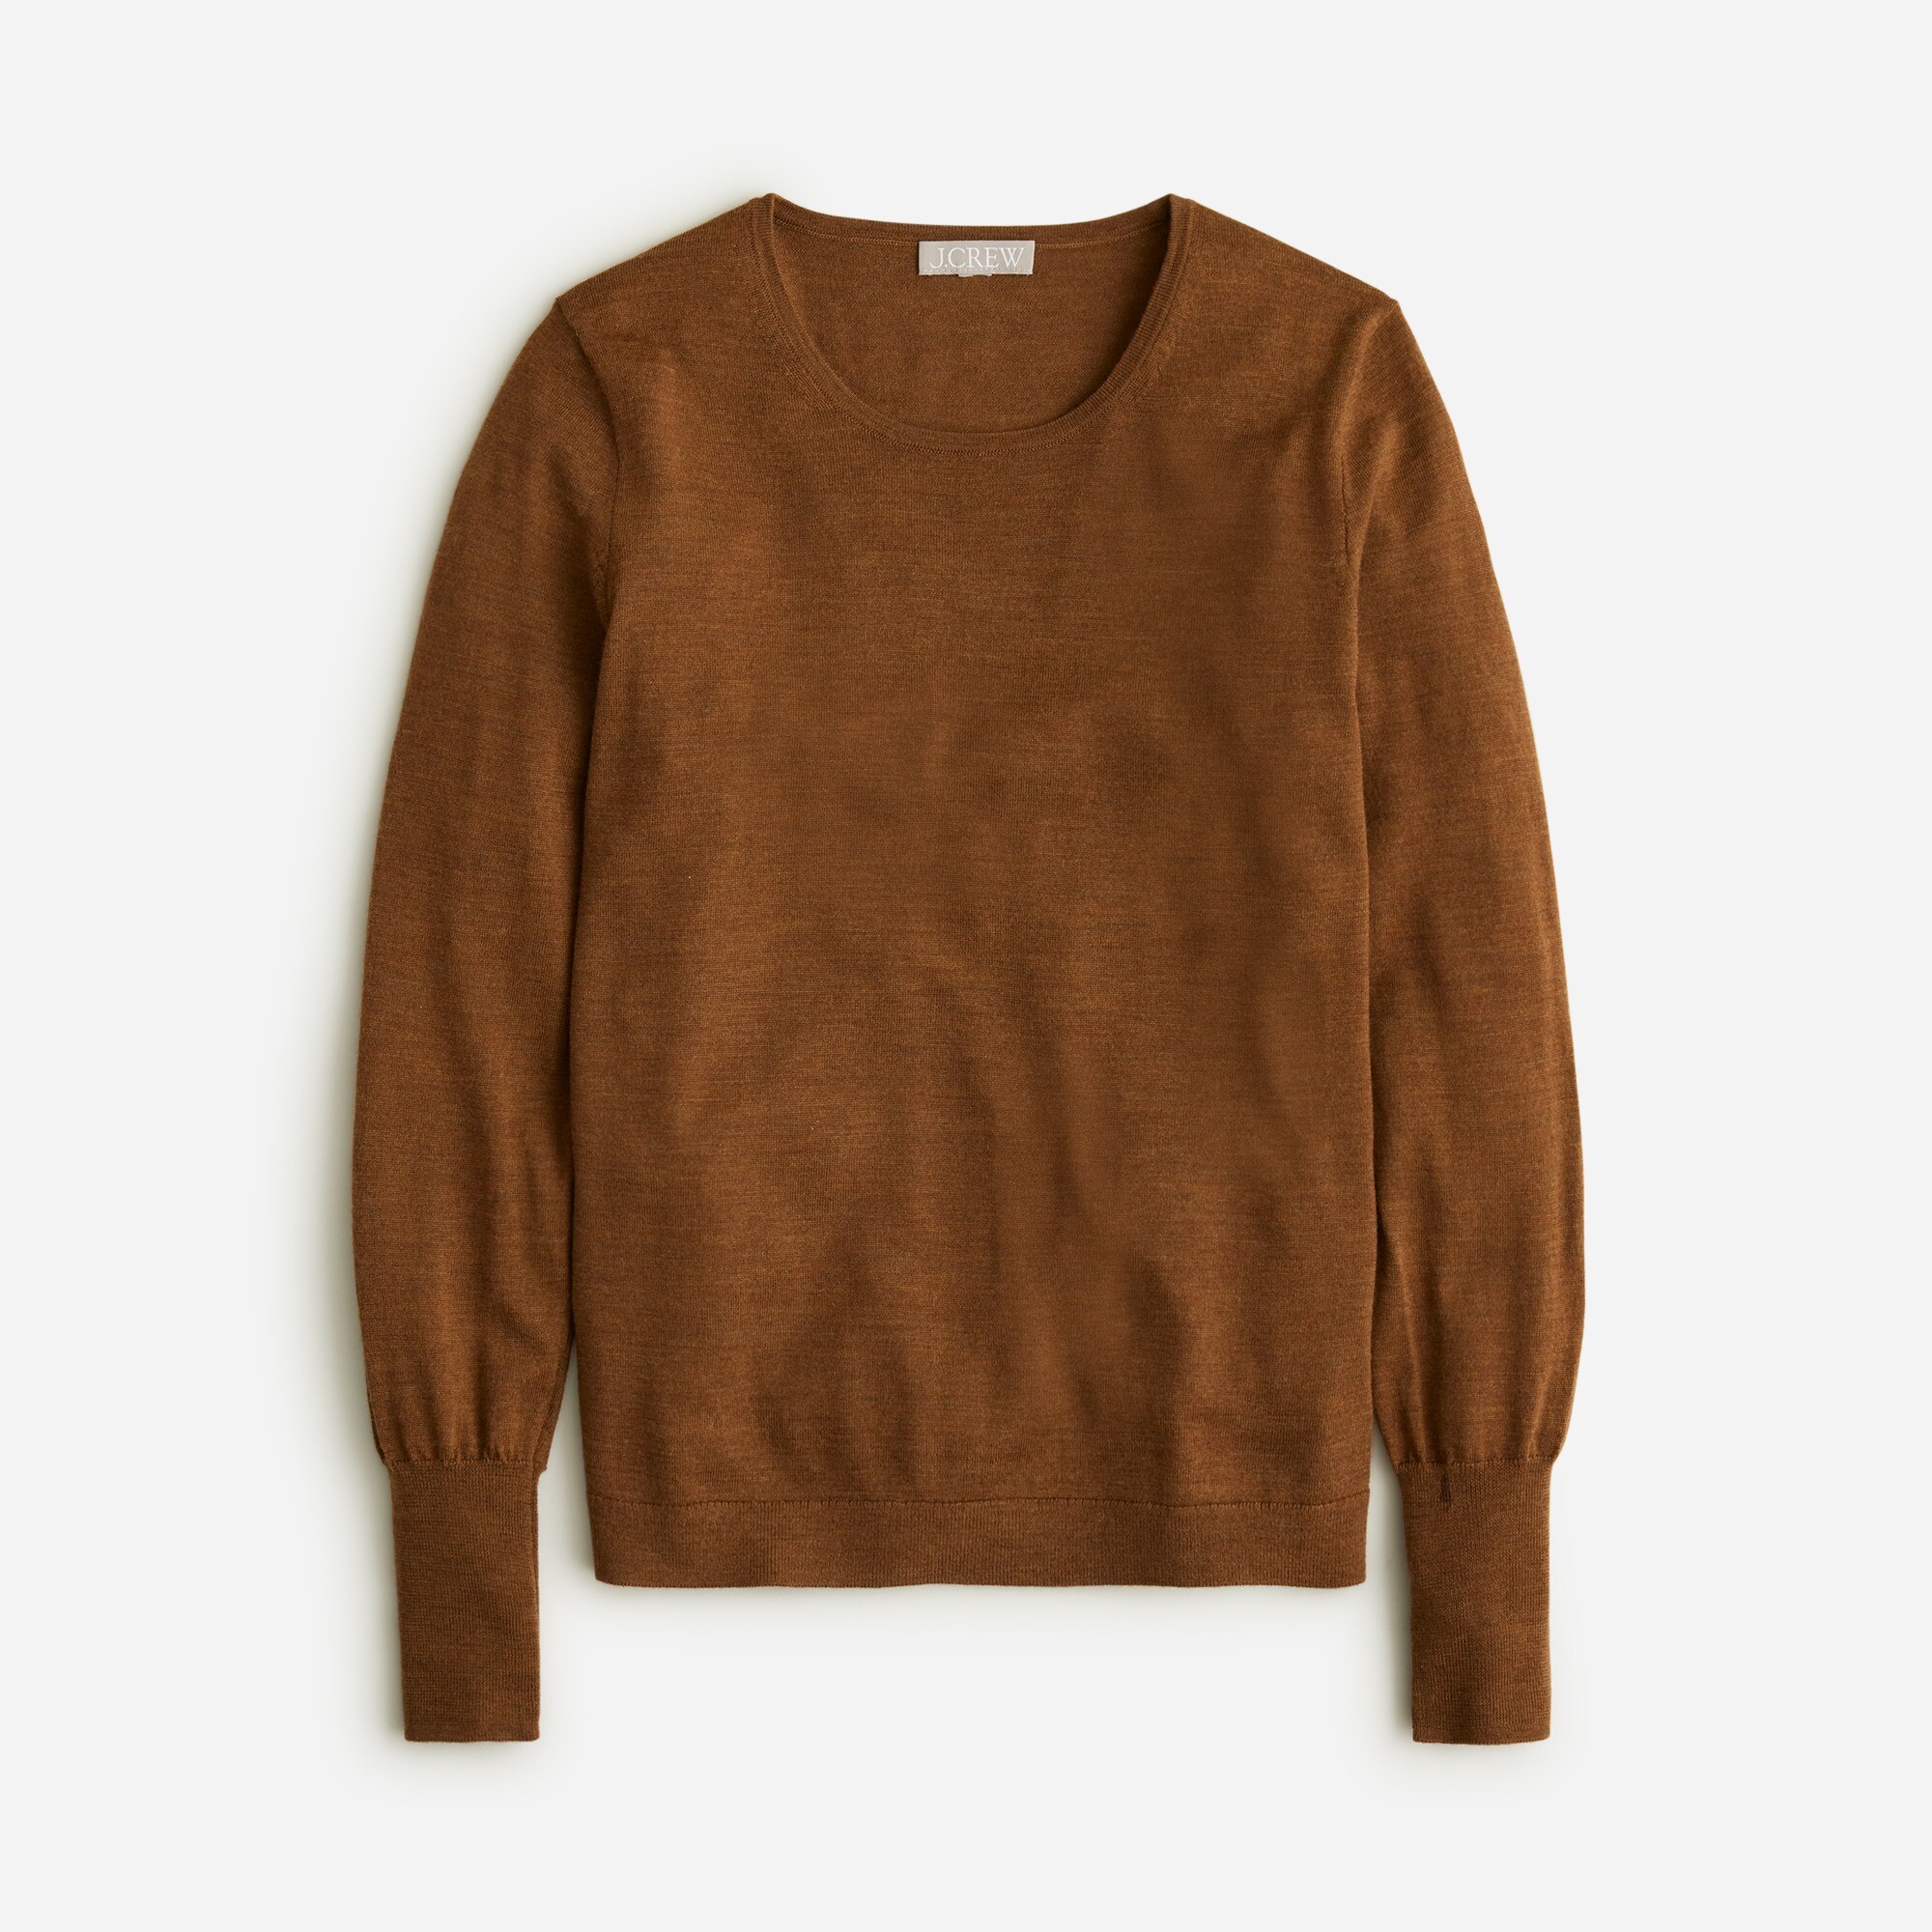  Halle crewneck sweater